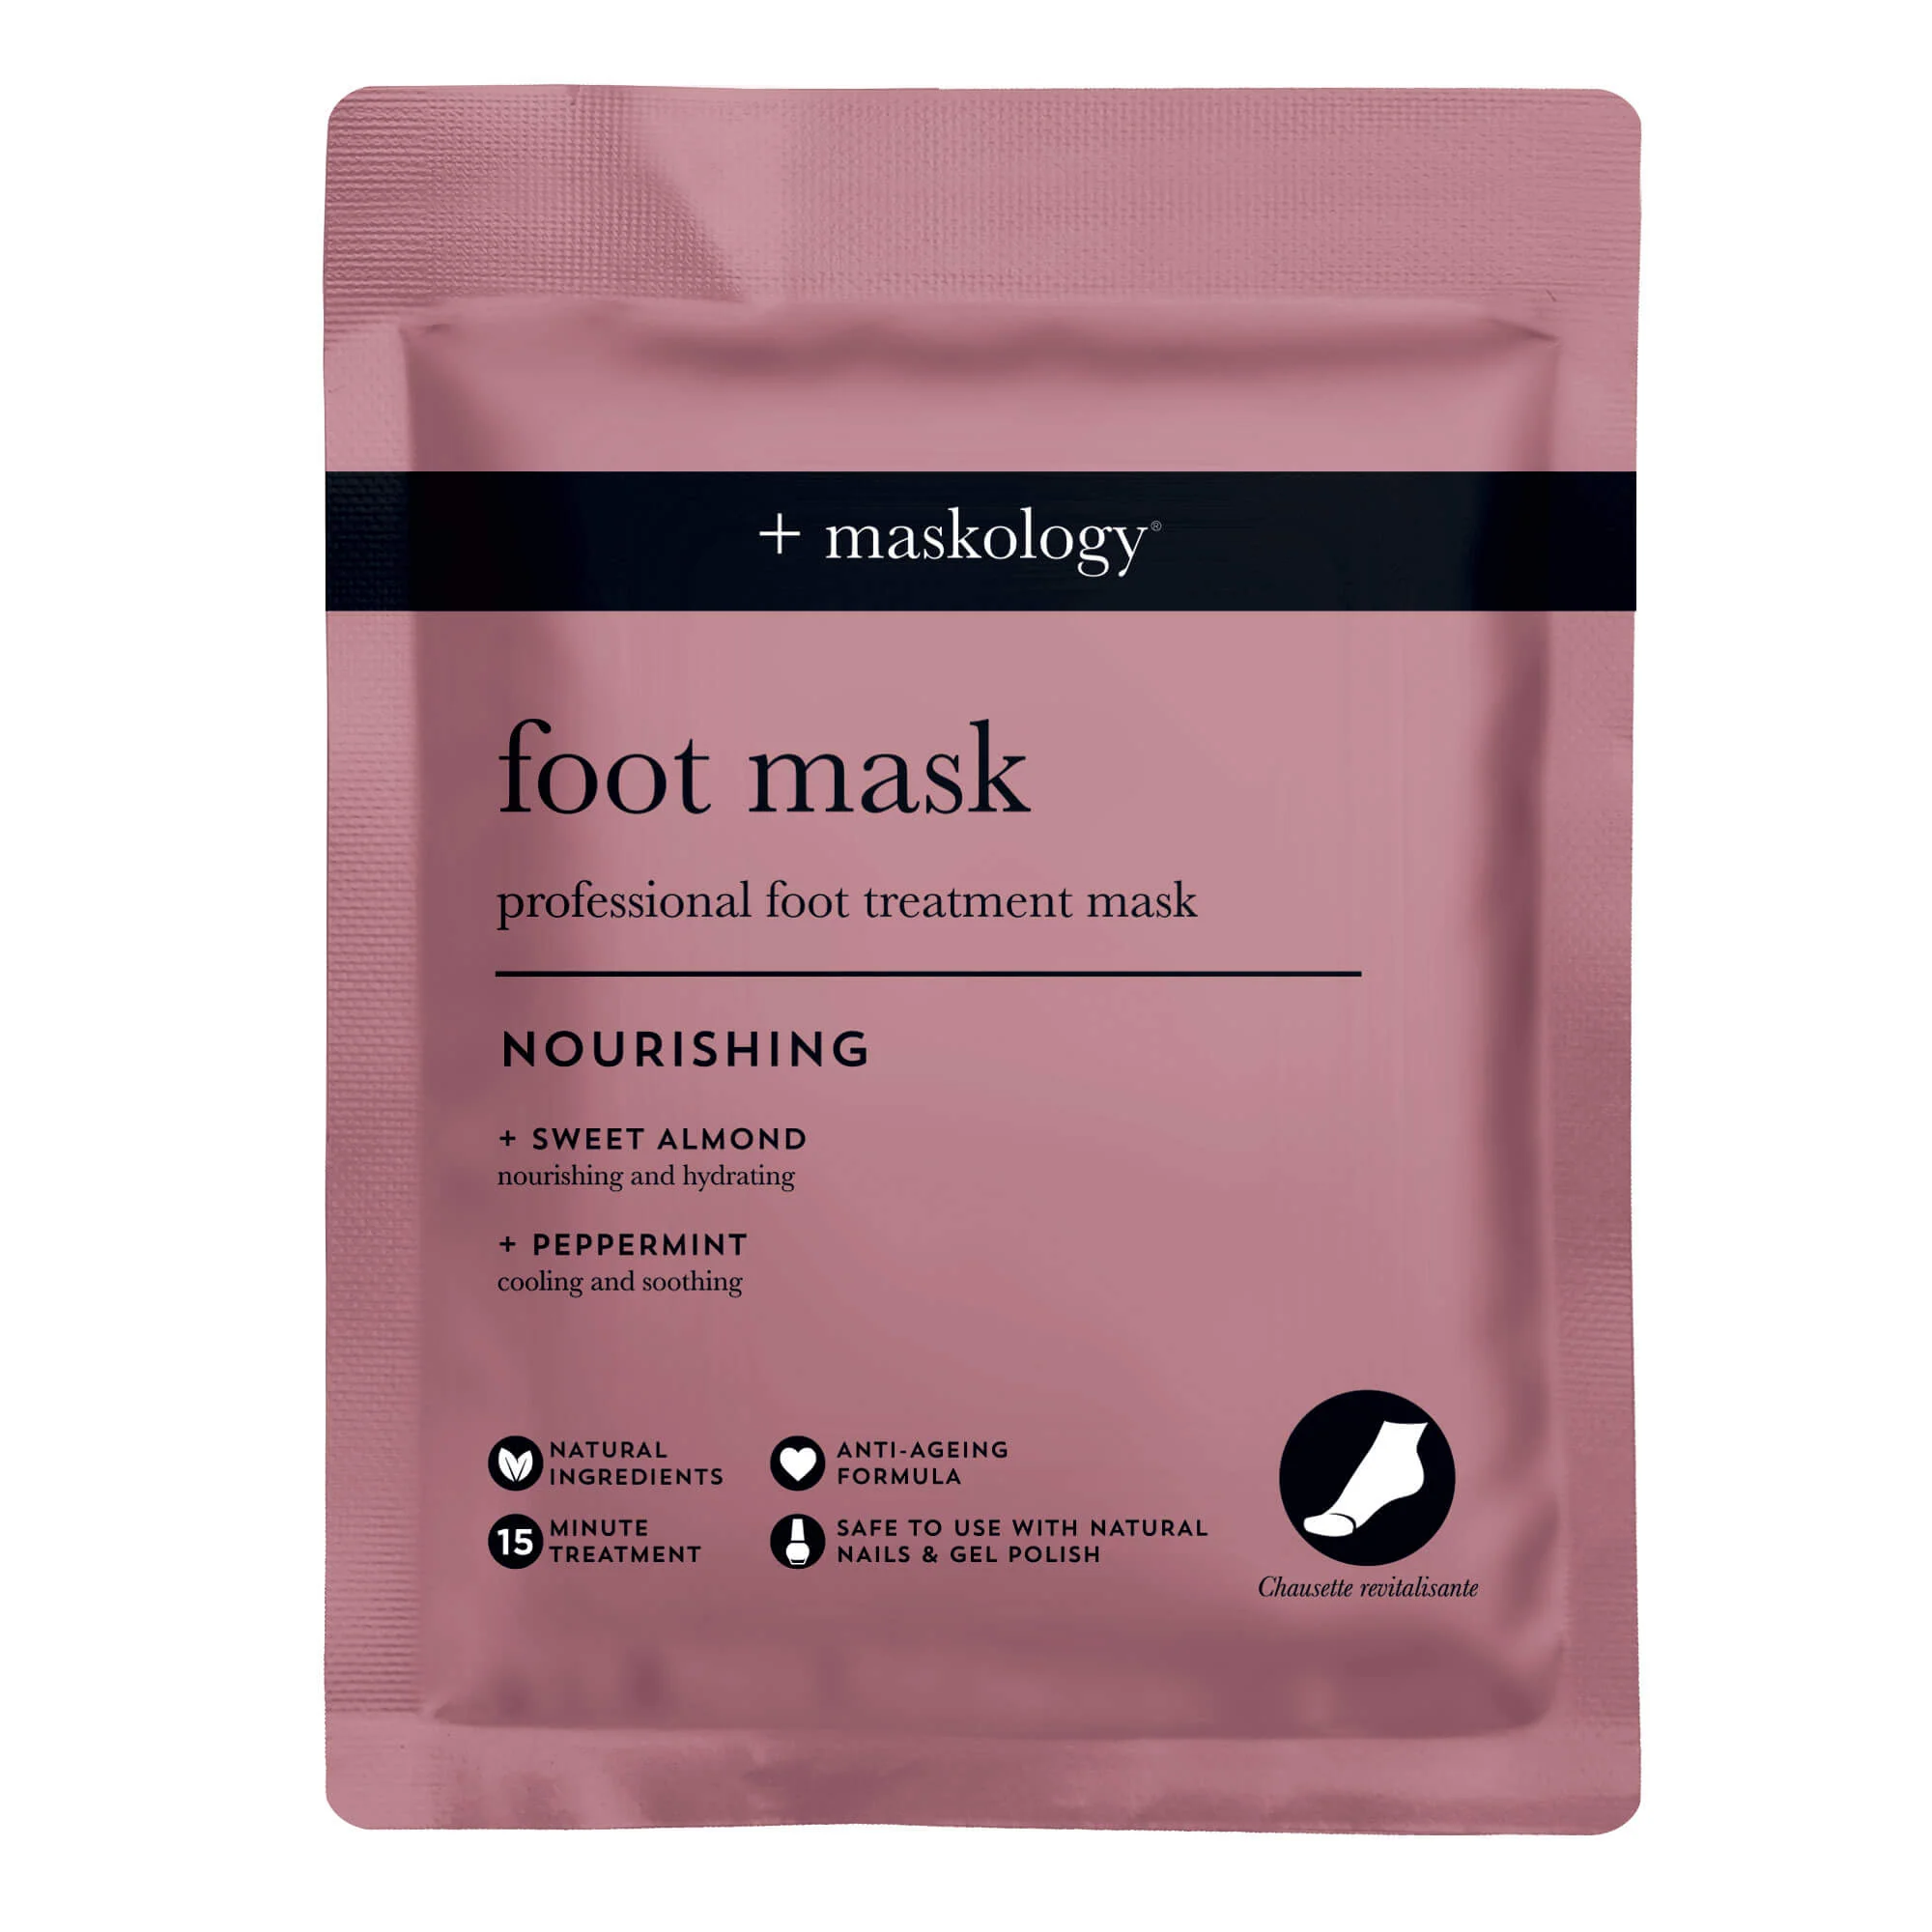 Maskology Foot Mask Professional Foot Treatment Mask